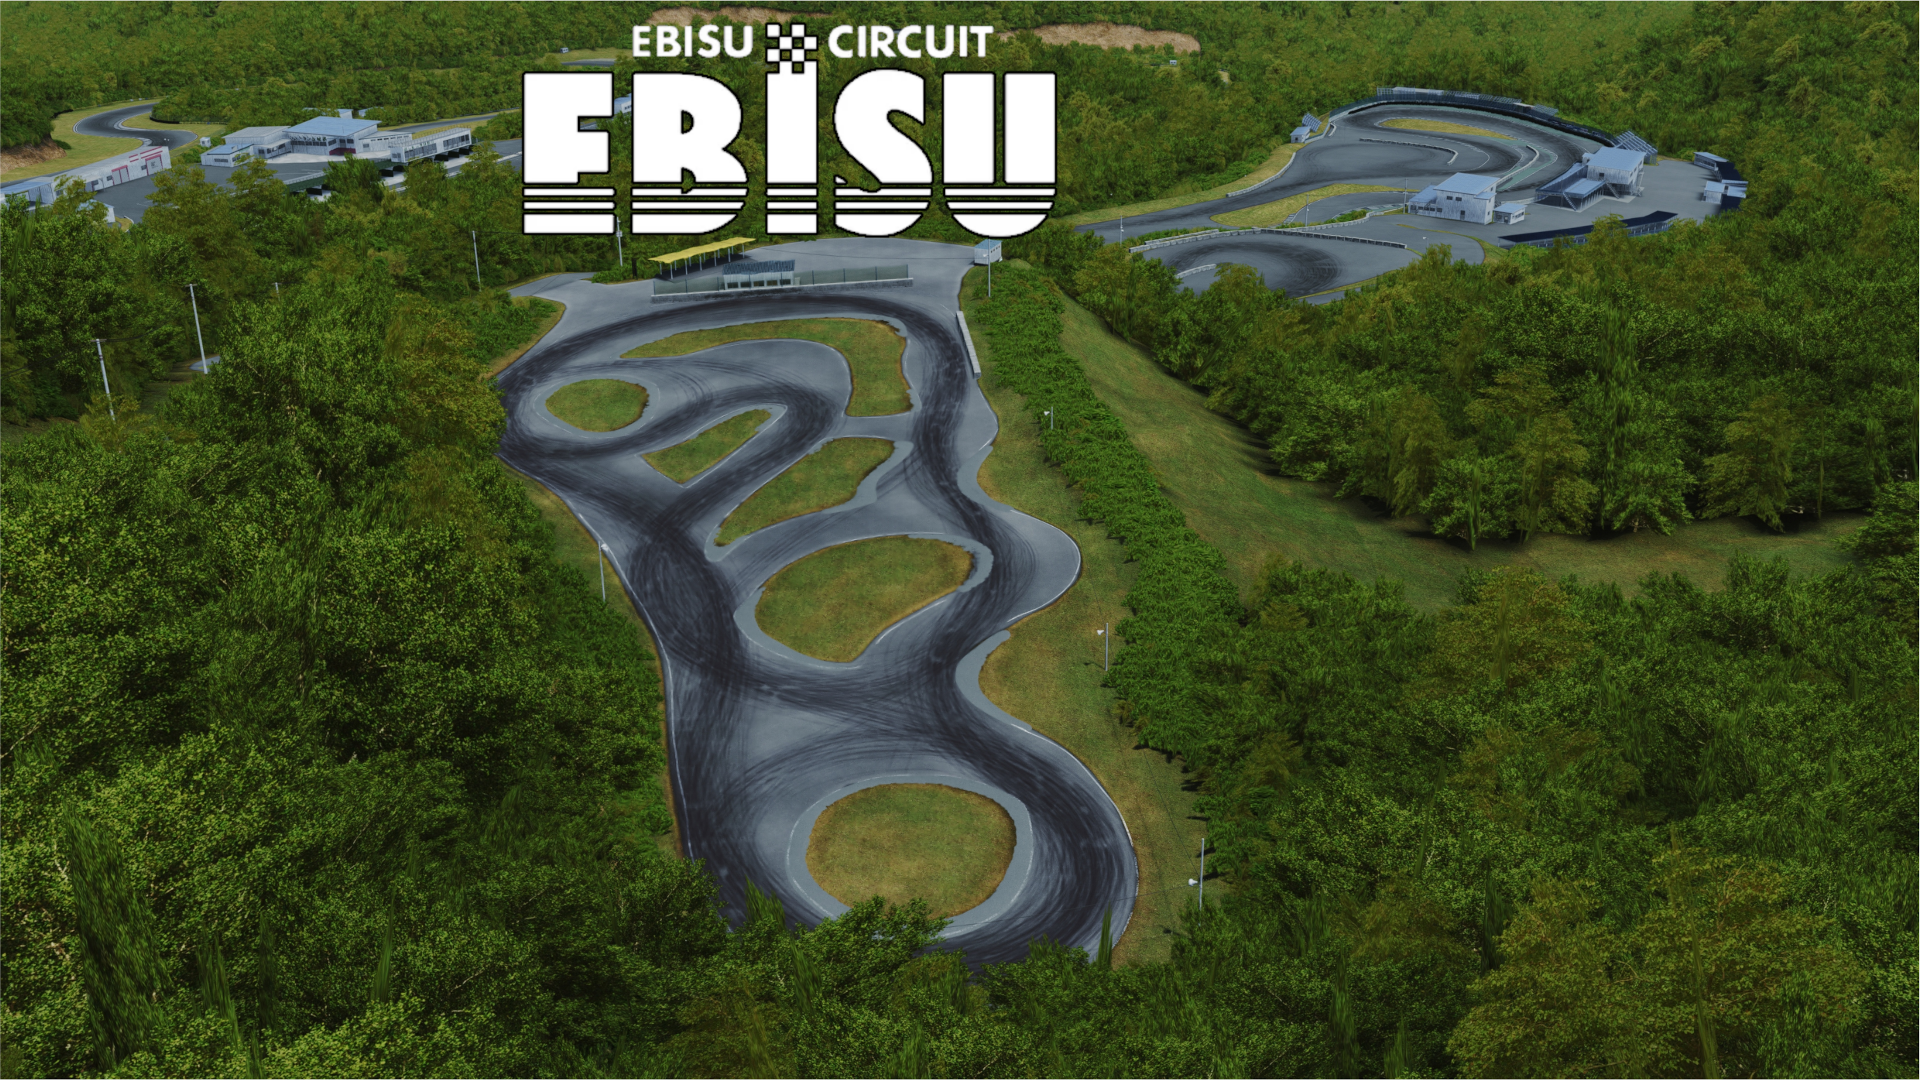 Playground Touge Drift Circuit - Assetto Corsa Club